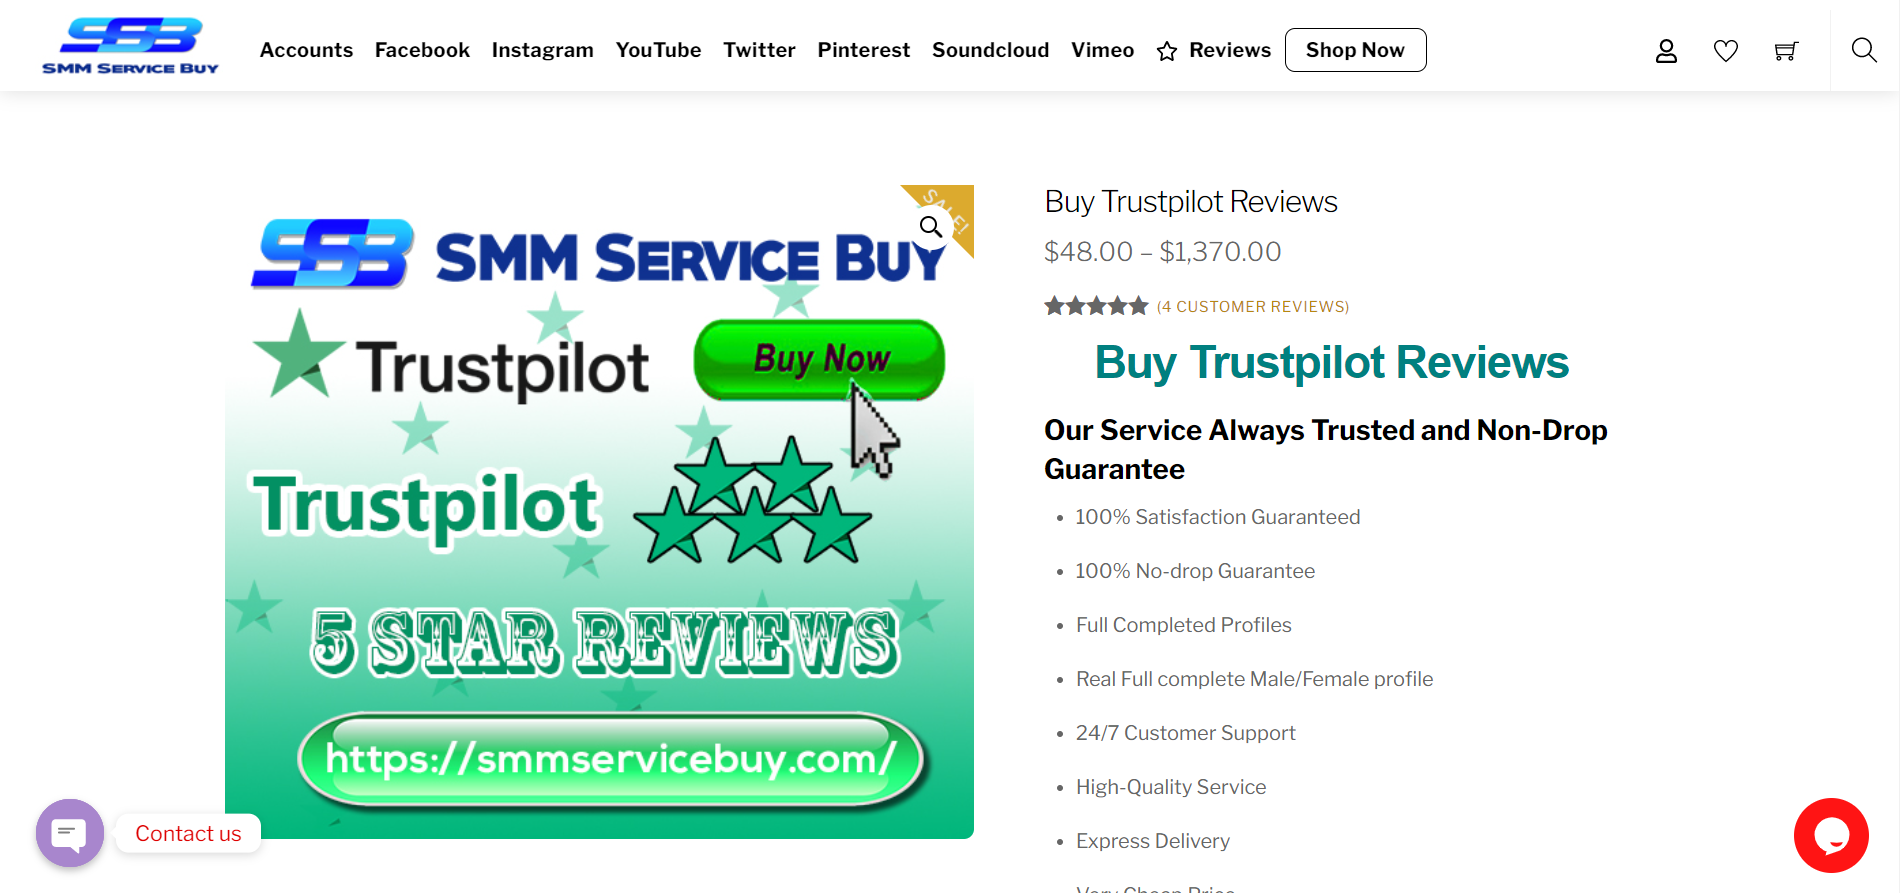 emptum Trustpilot reviews